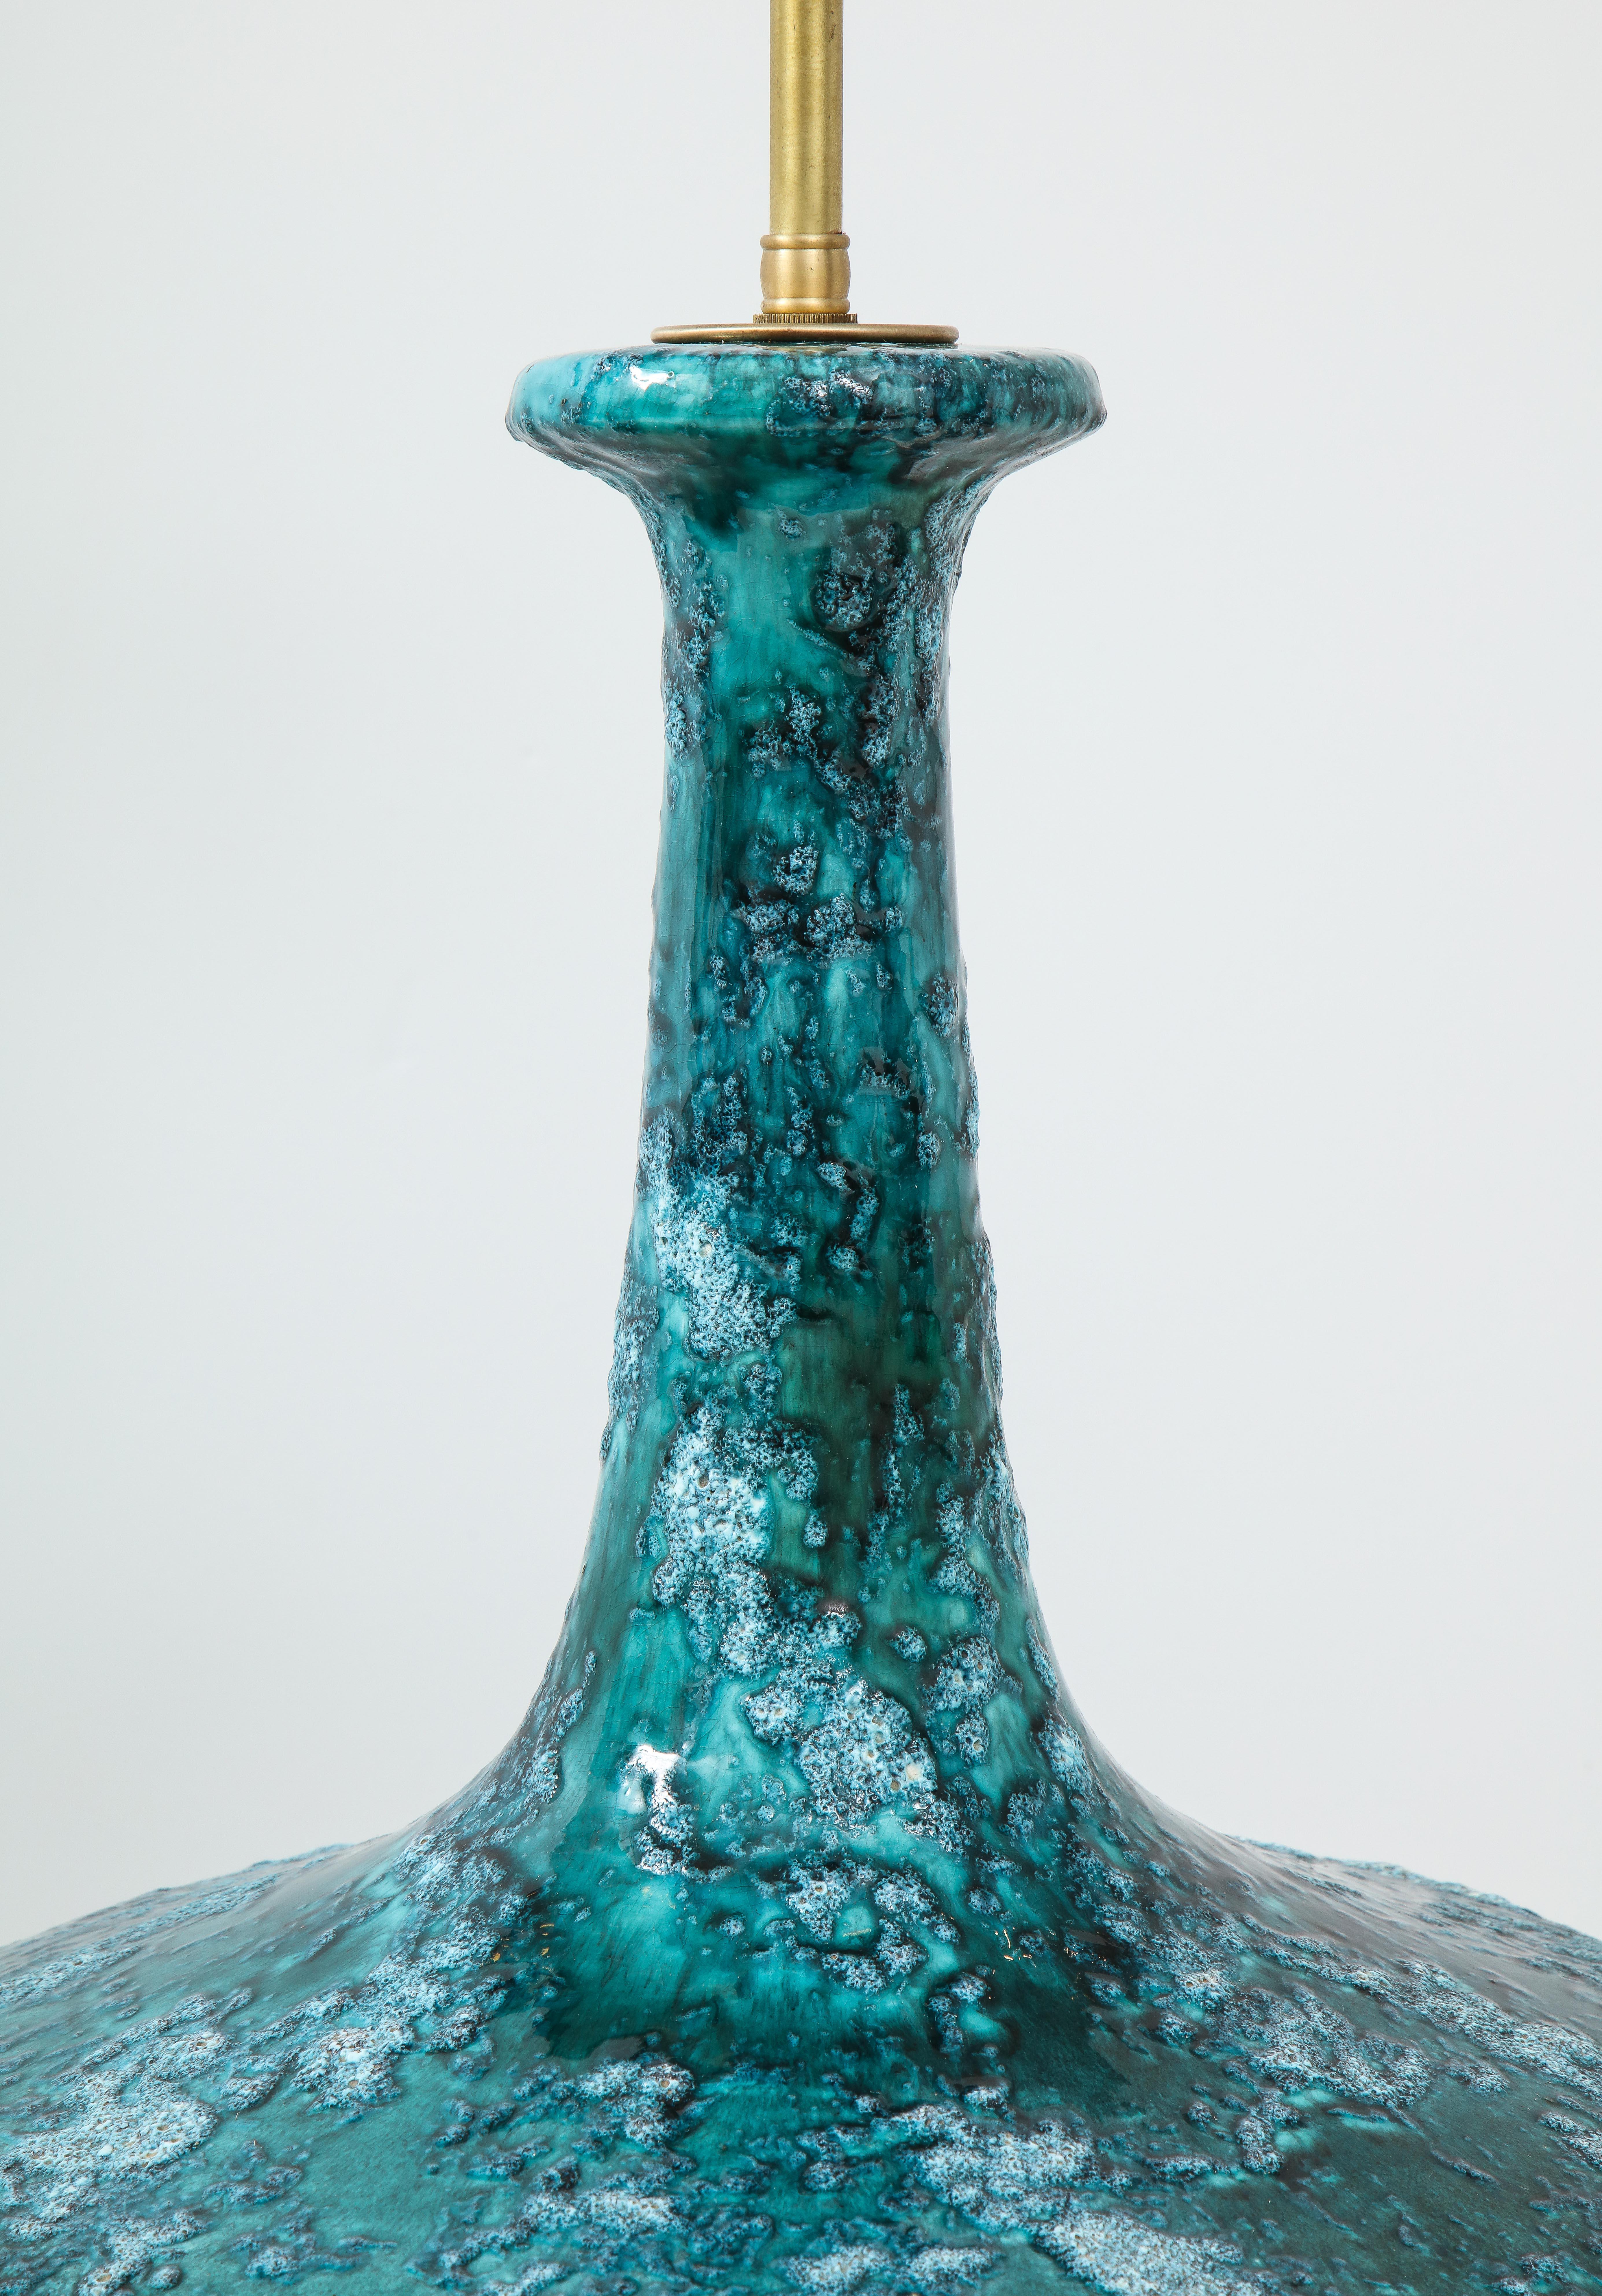 Midcentury Italian Blue, Green Glazed Ceramic Lamps 5